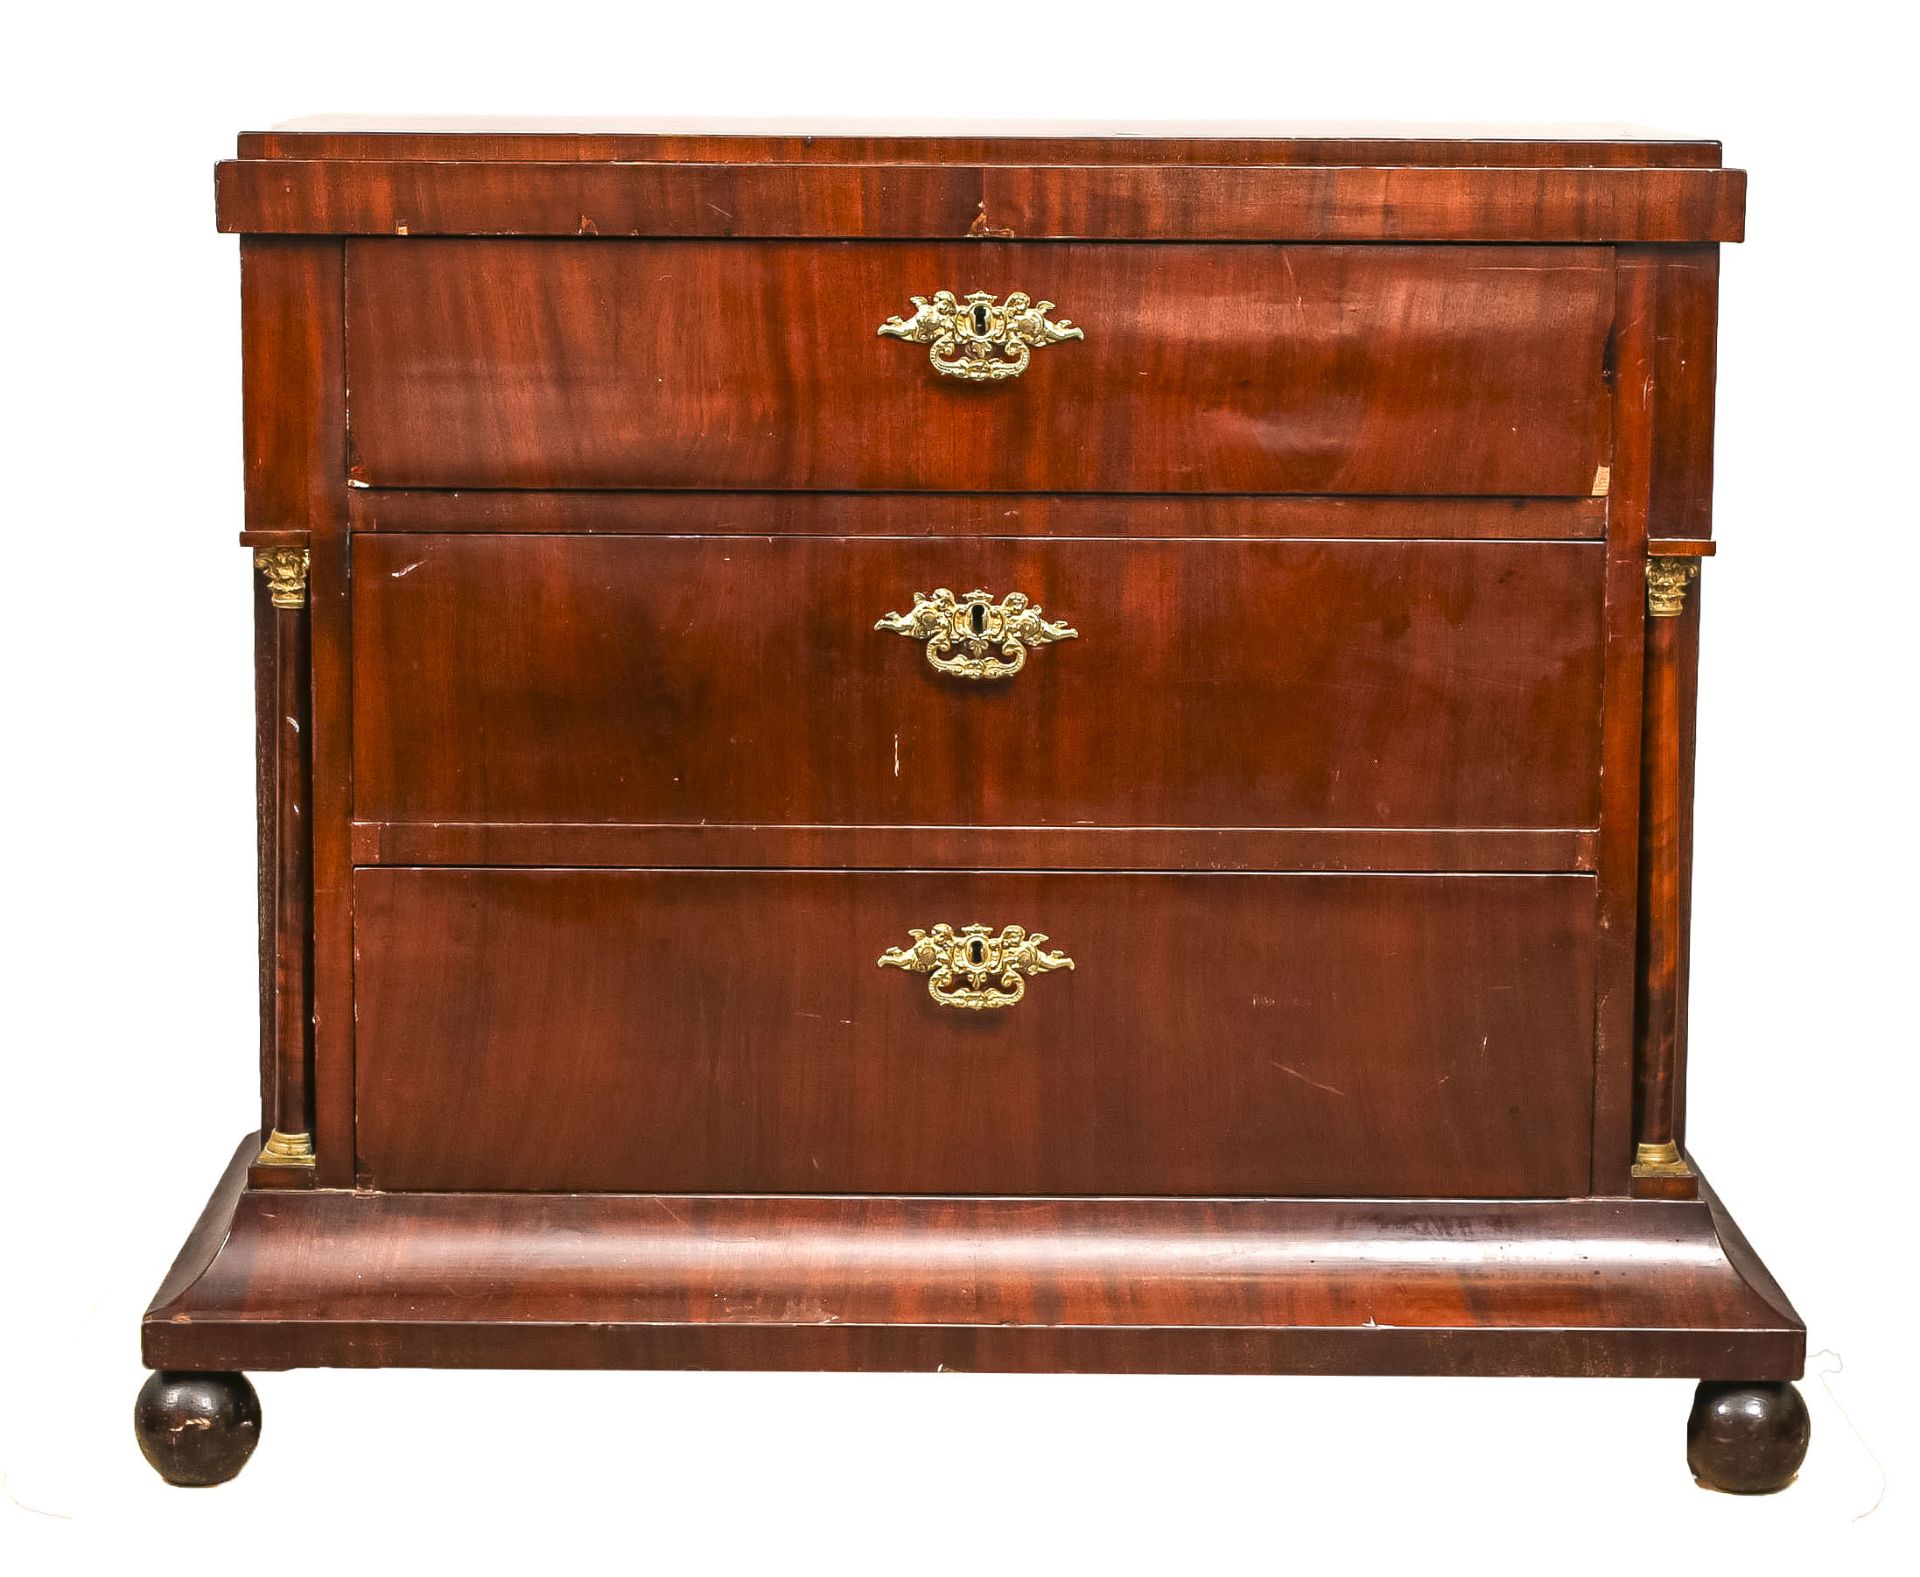 Late Biedermeier chest of drawers, 19th century, mahogany veneer, full columns with gilded metal